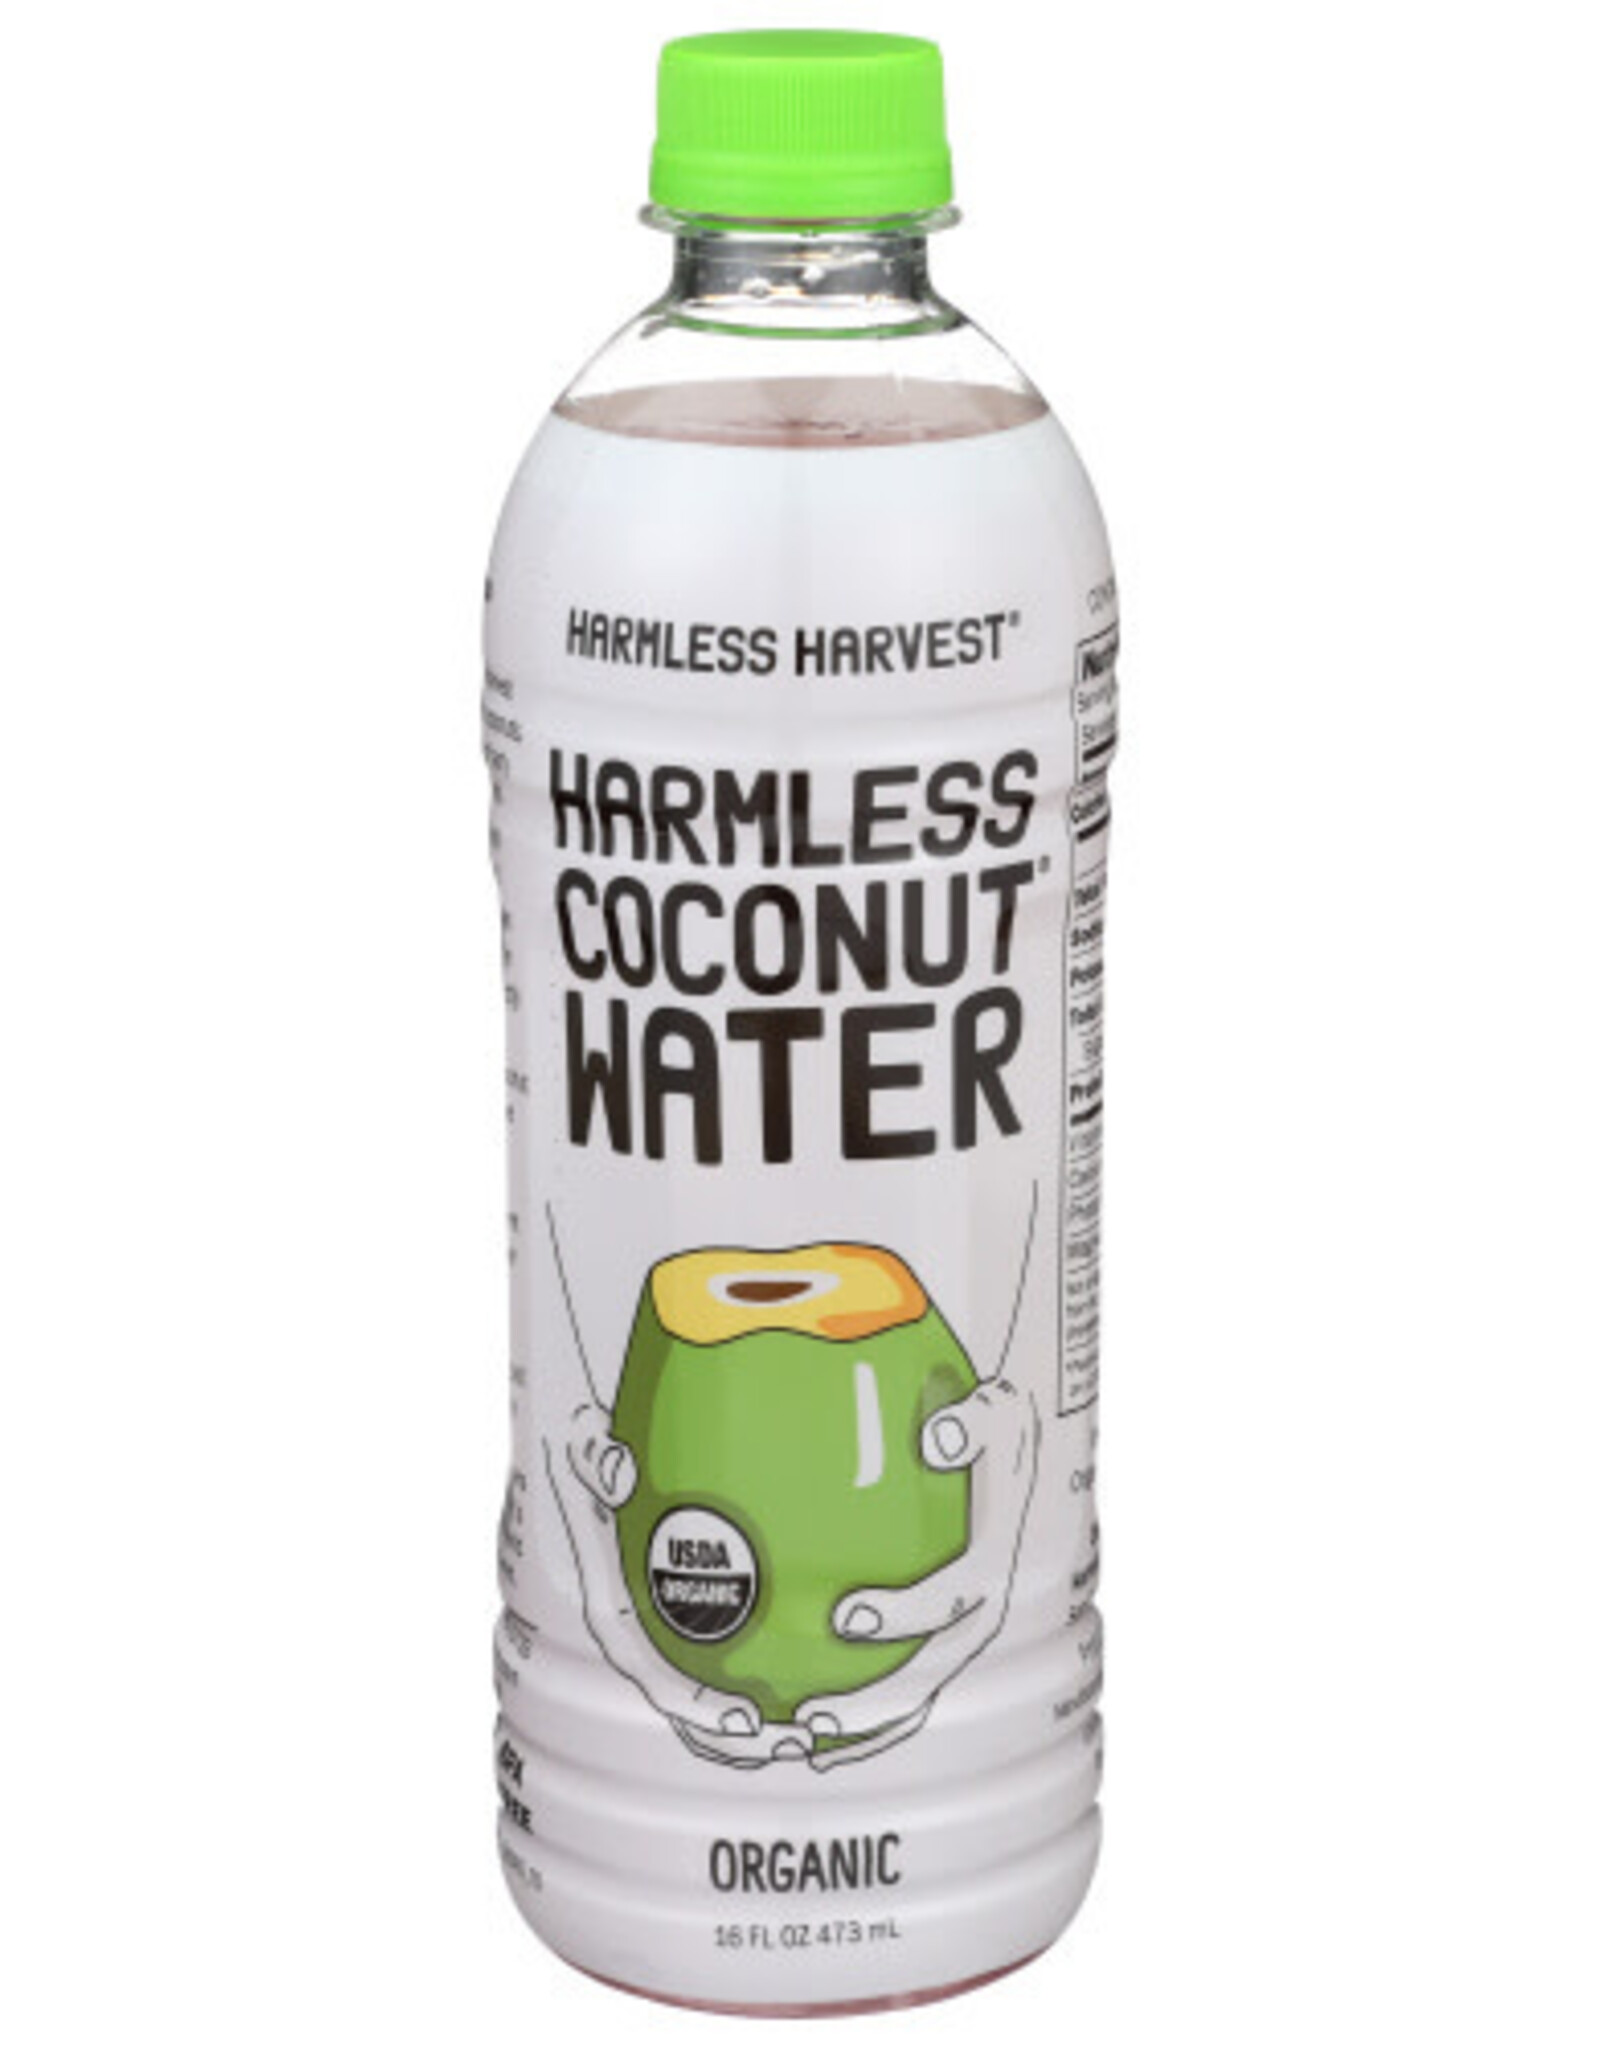 HARMLESS HARVEST® HARMLESS HARVEST COCONUT WATER, 16 FL. OZ.